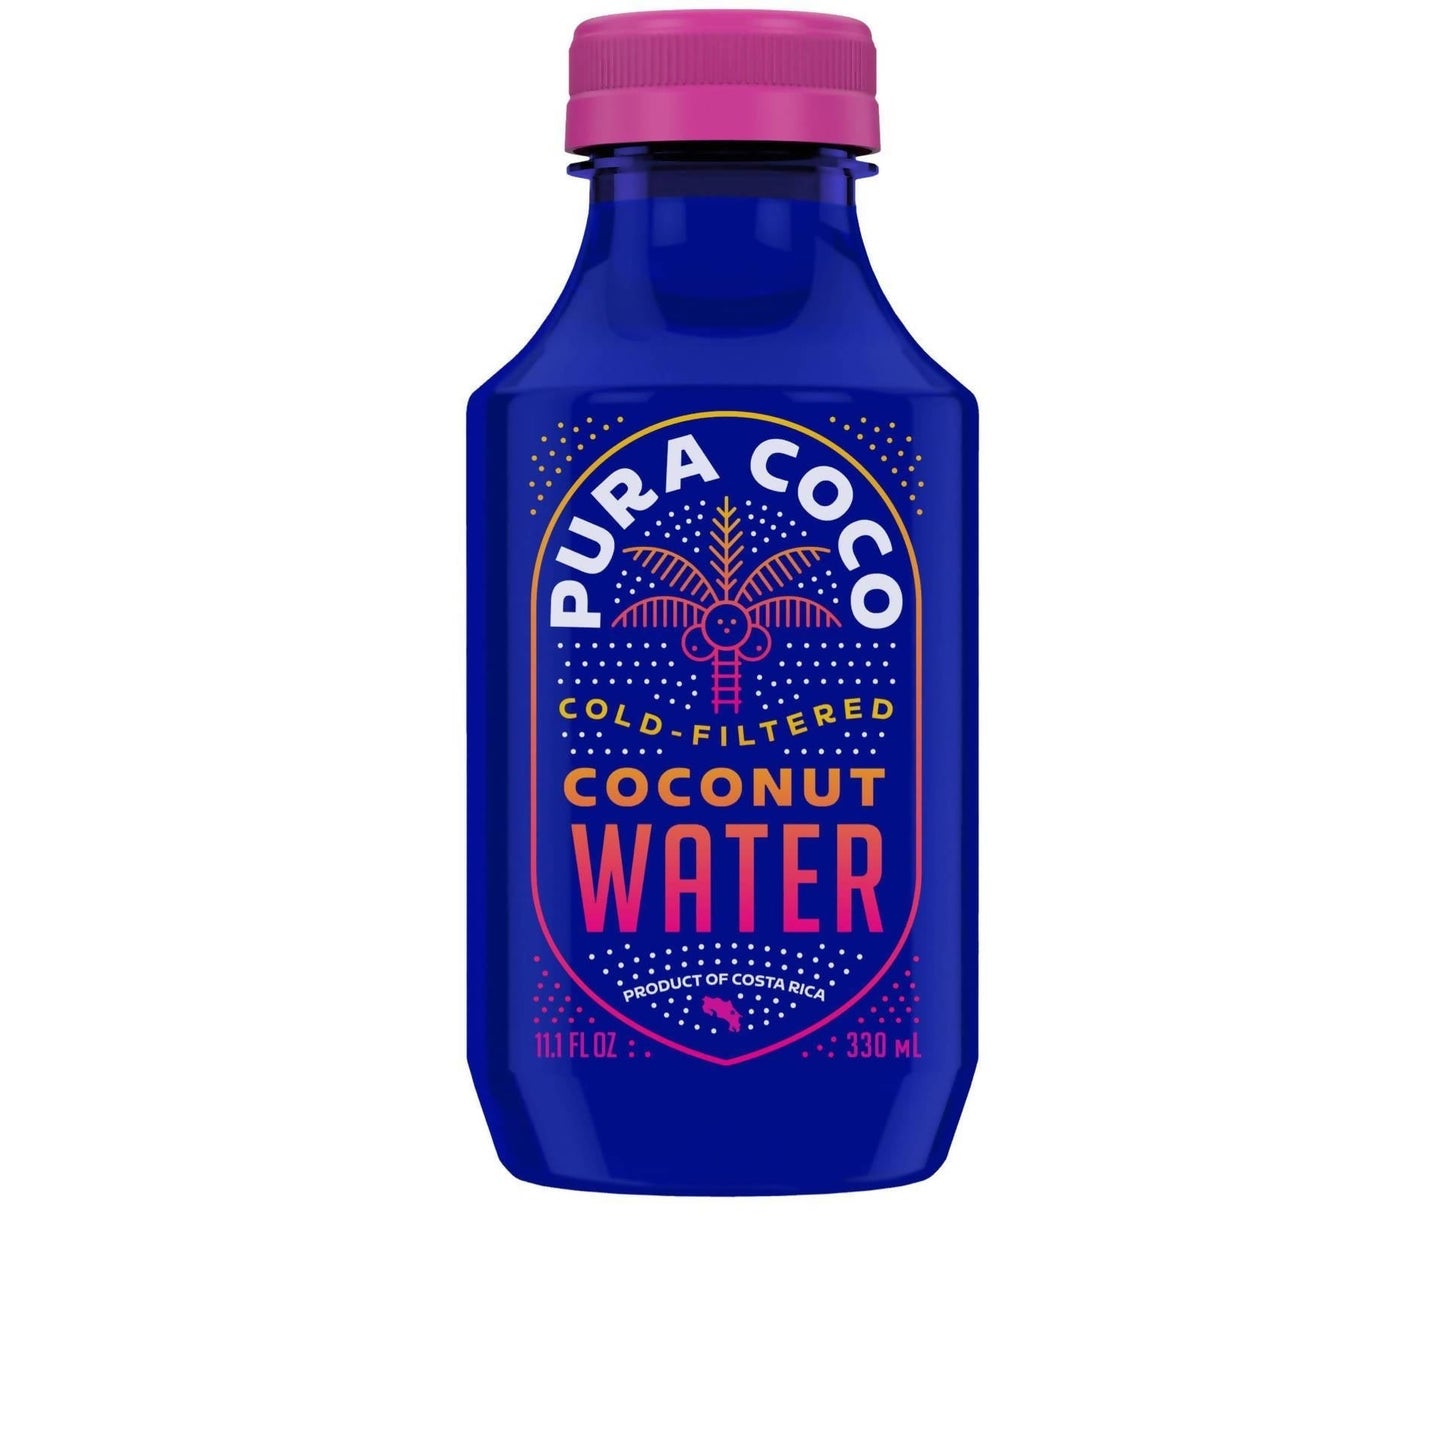 Pura Coco Coconut Water Bottles - 12 x 11.1 oz by Farm2Me